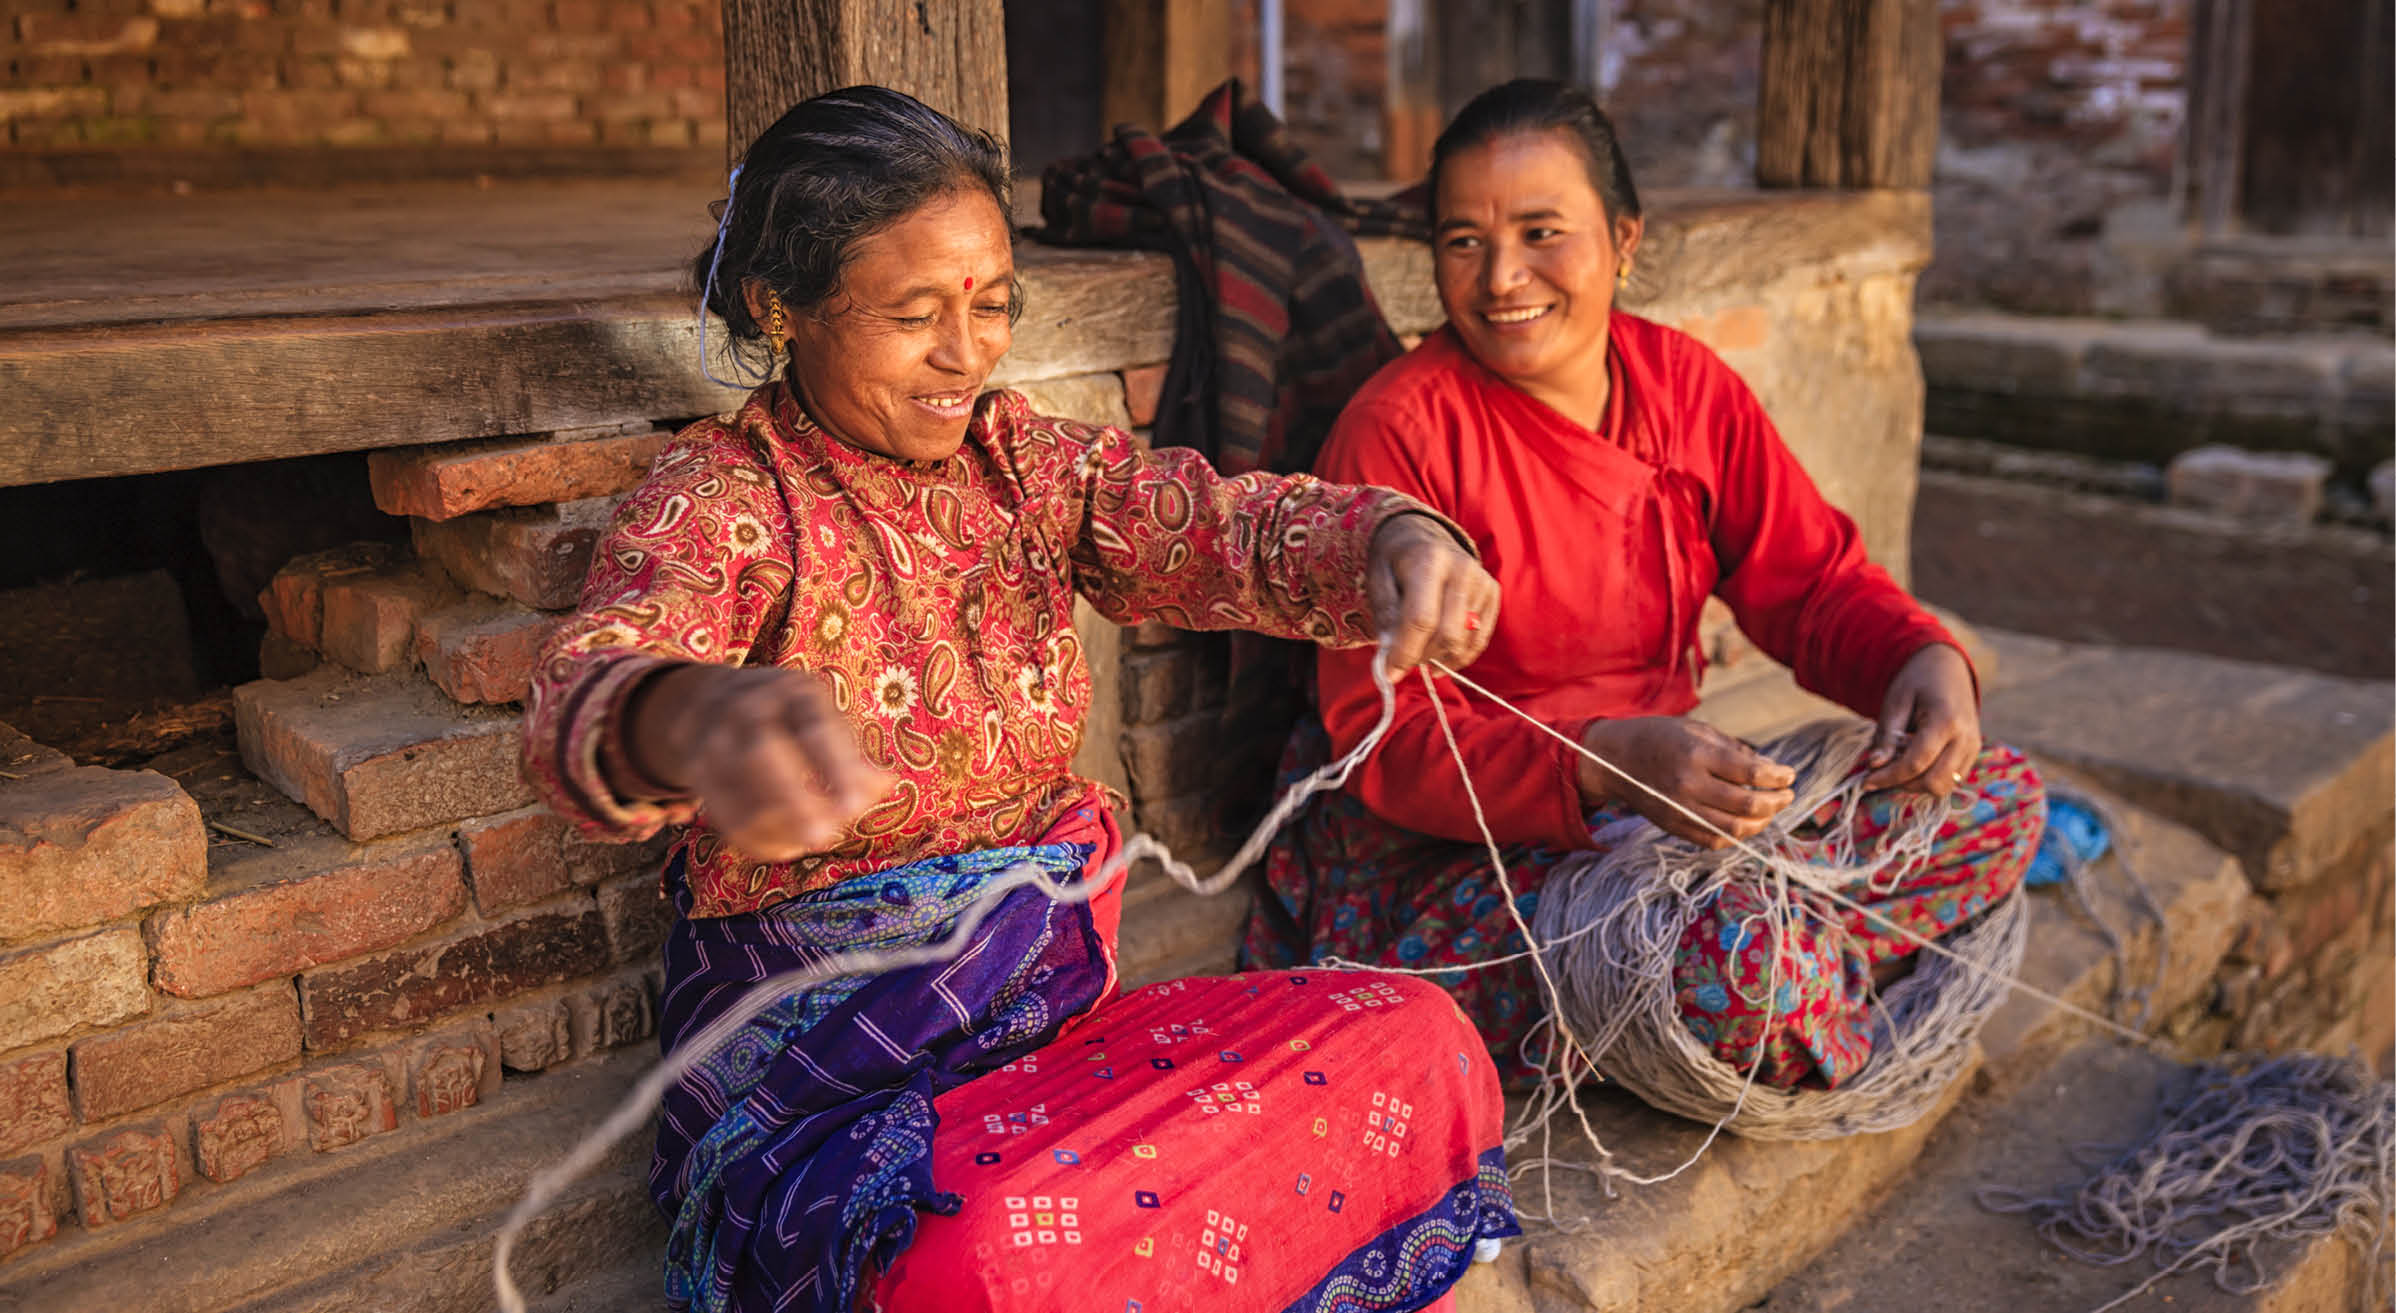 Nepali women spinning a wool in front of the house. Bhaktapur in Kathmandu valley. Nepal.http://bem.2be.pl/IS/nepal_380.jpg